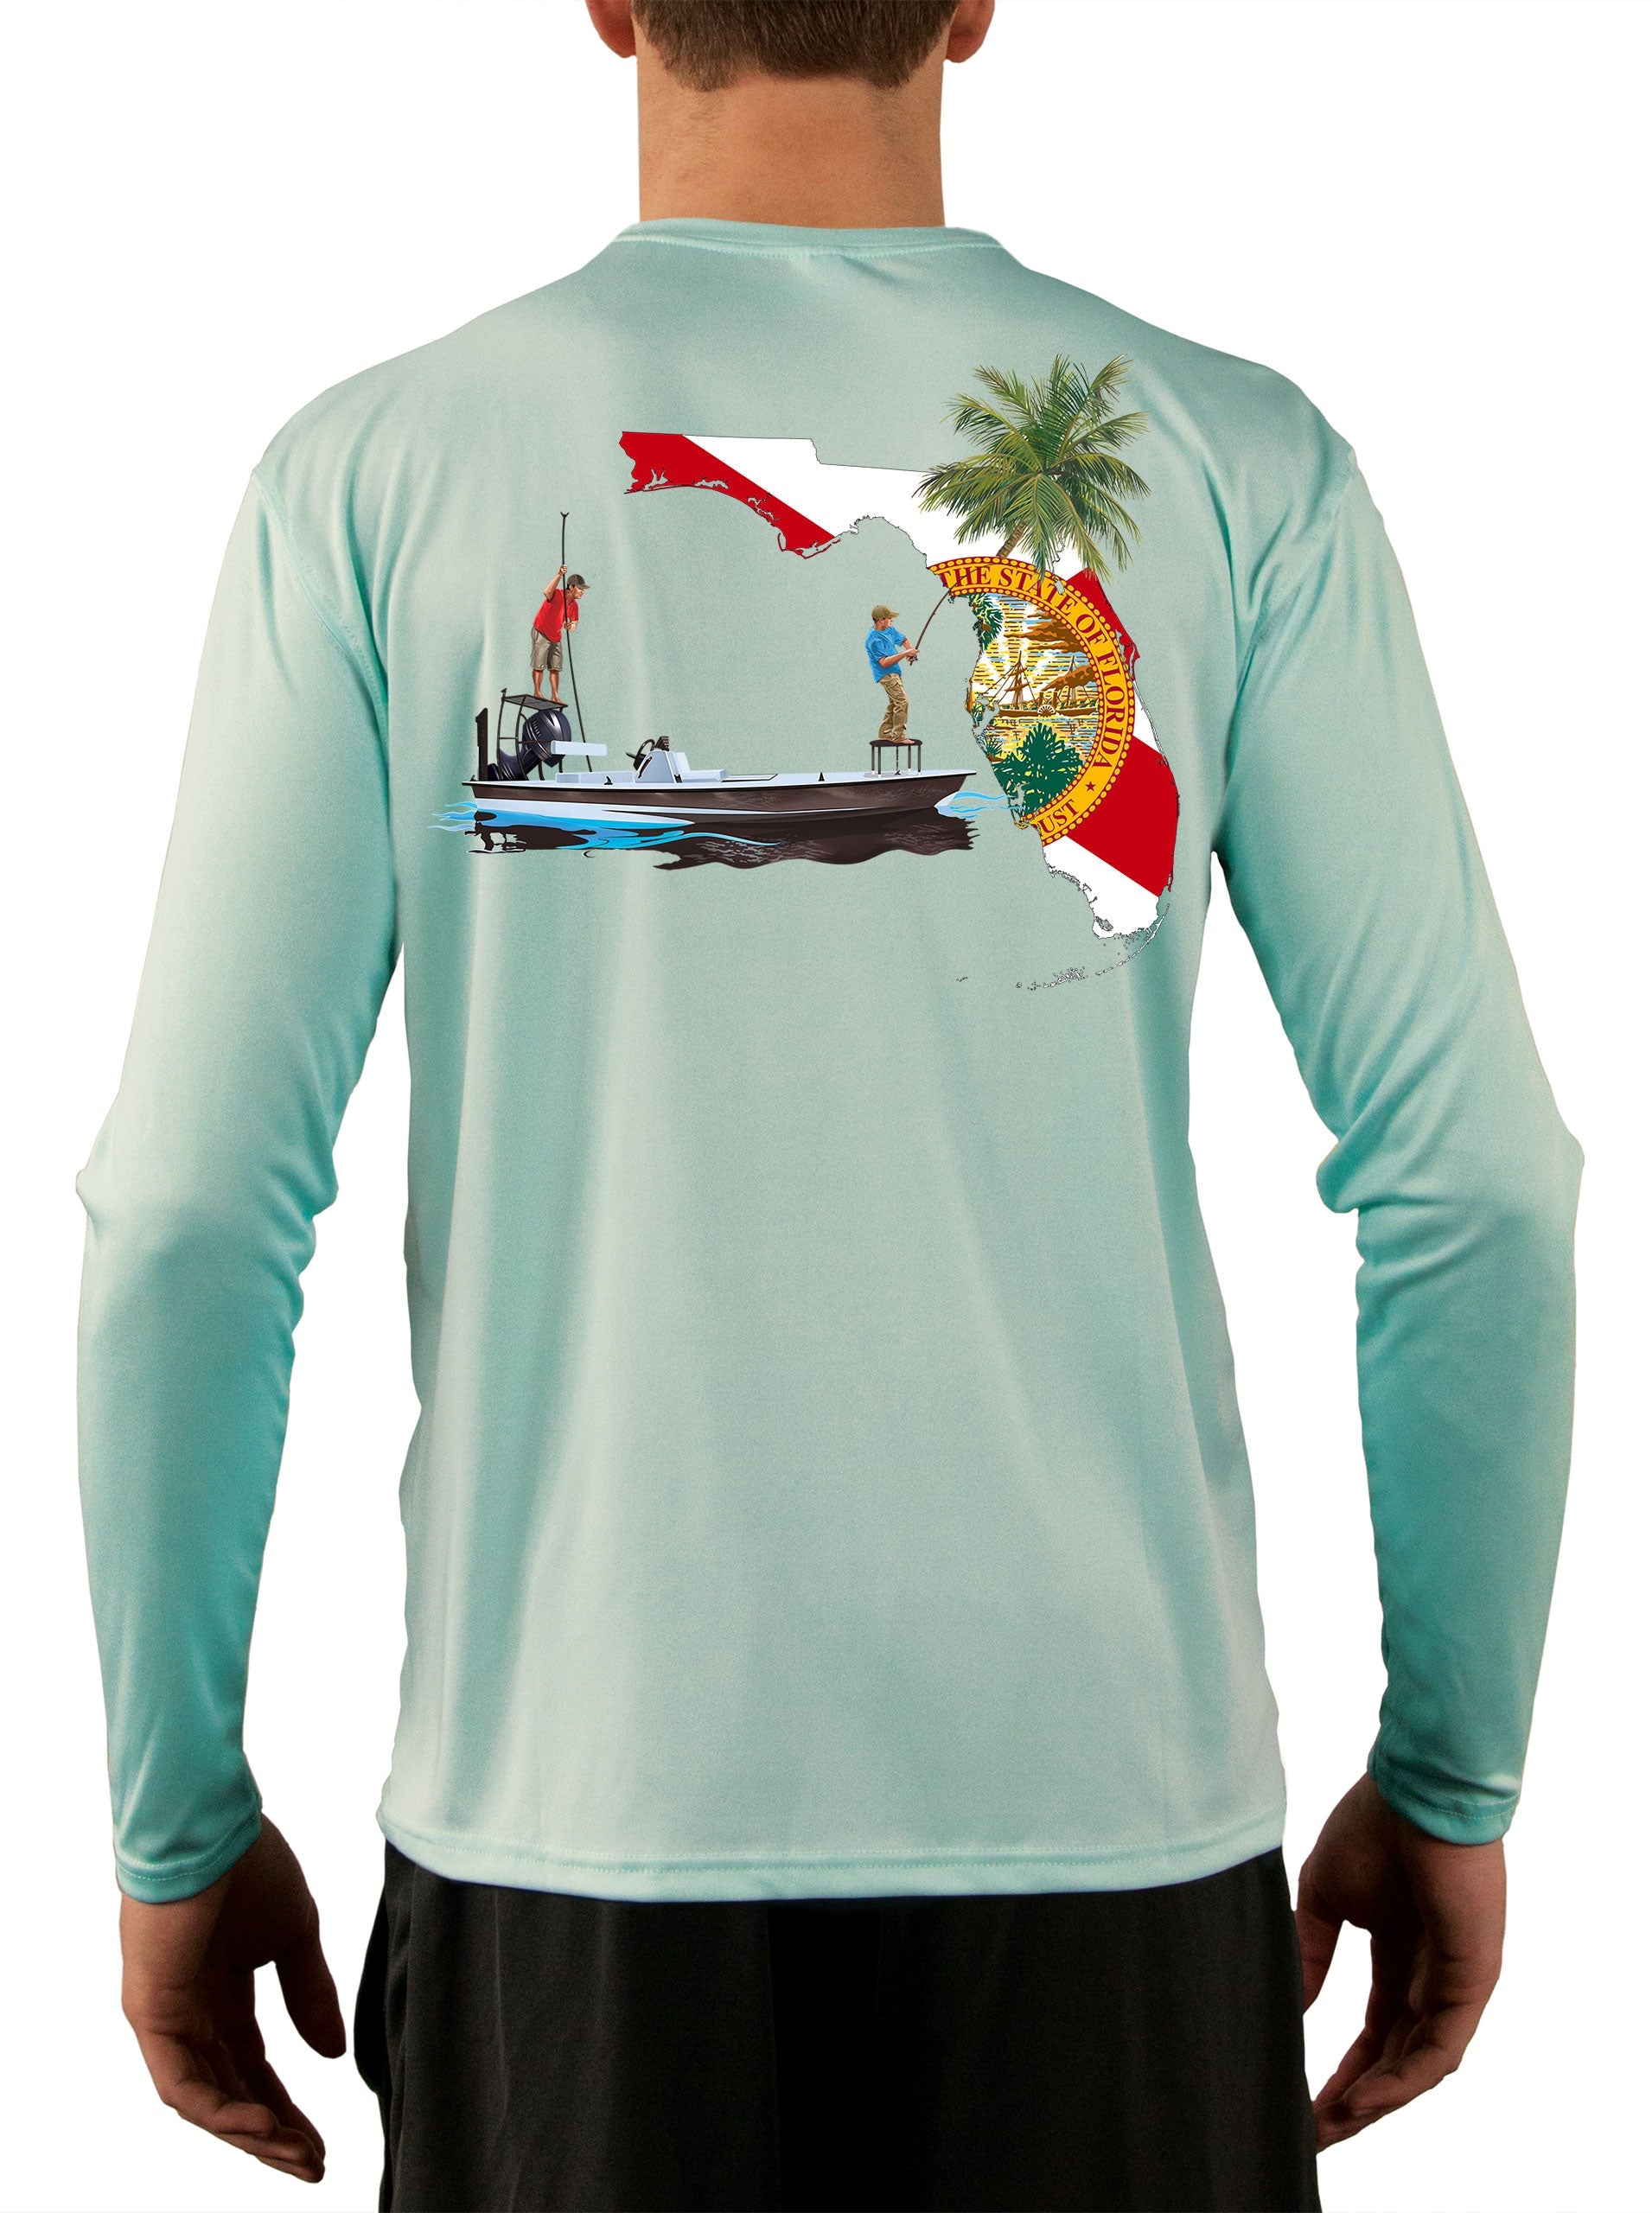 New Artwork] Poling Skiff Florida State Flag Fishing Shirts for